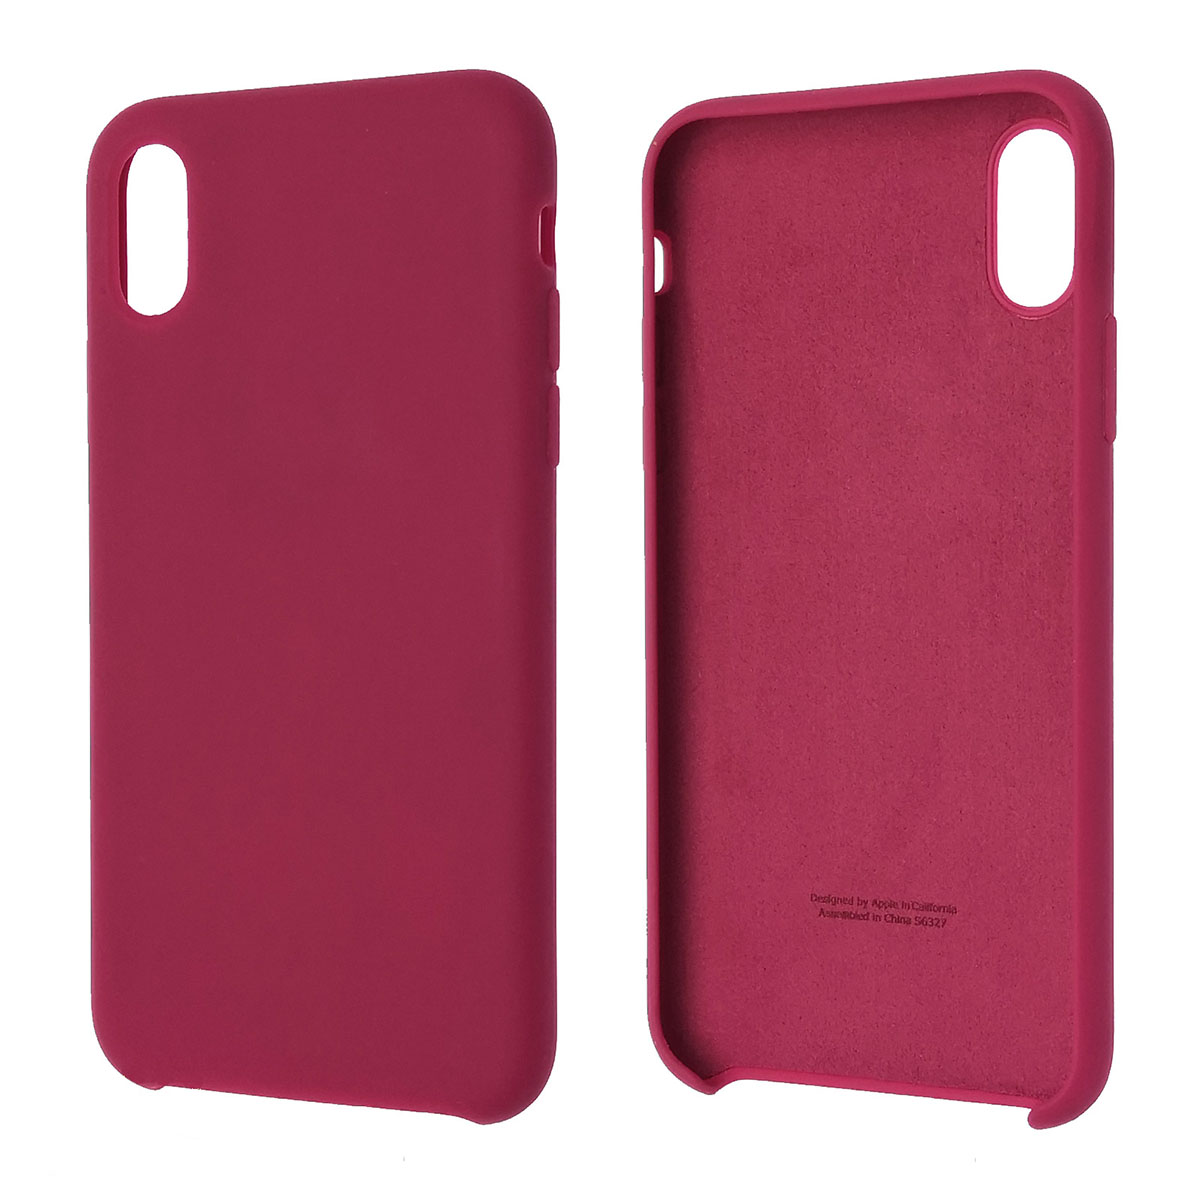 Чехол накладка Silicon Case для APPLE iPhone X, iPhone XS, силикон, бархат, цвет вишневый